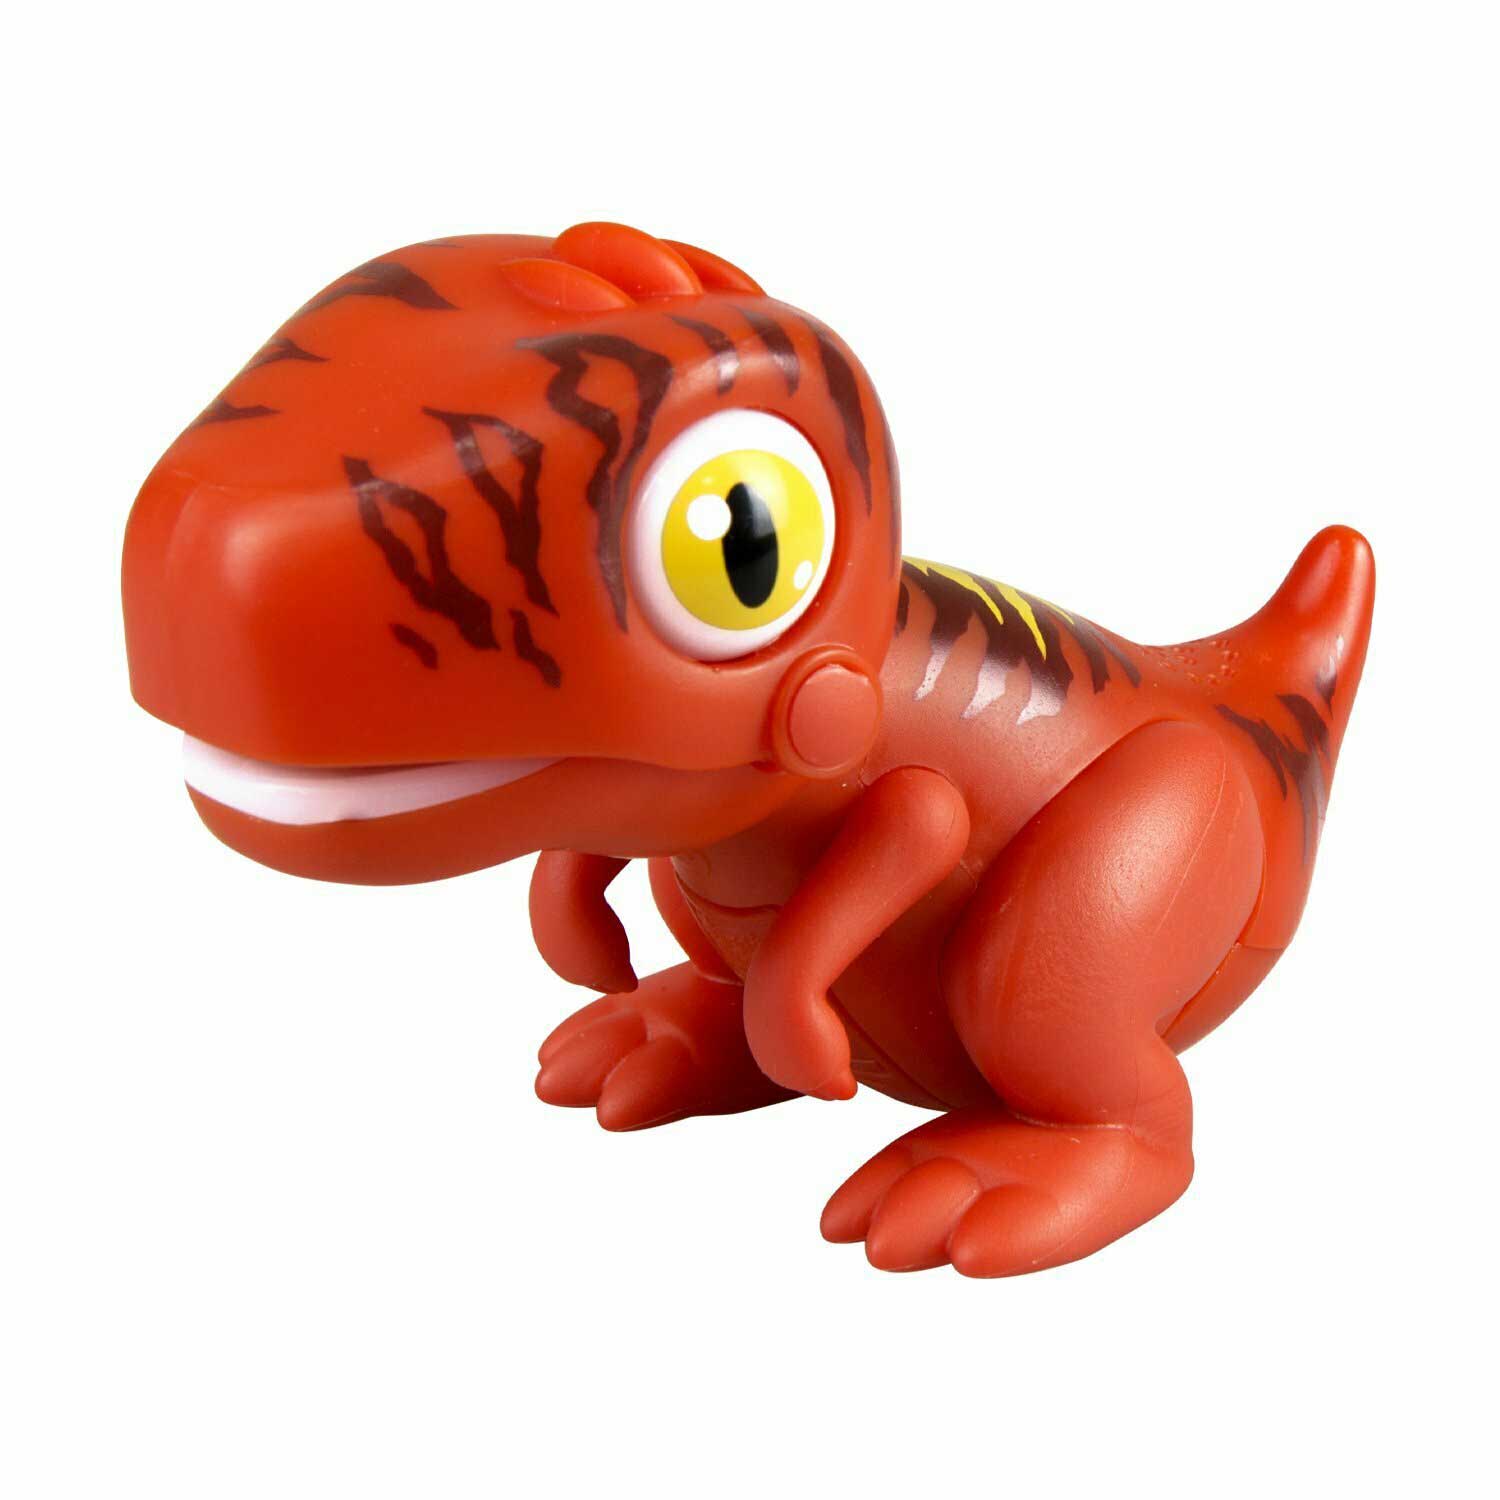 Динозавр Silverlit Gulliver Глупи красный арт.88581-1 интерактивные игрушки veld co динозавр ютораптор